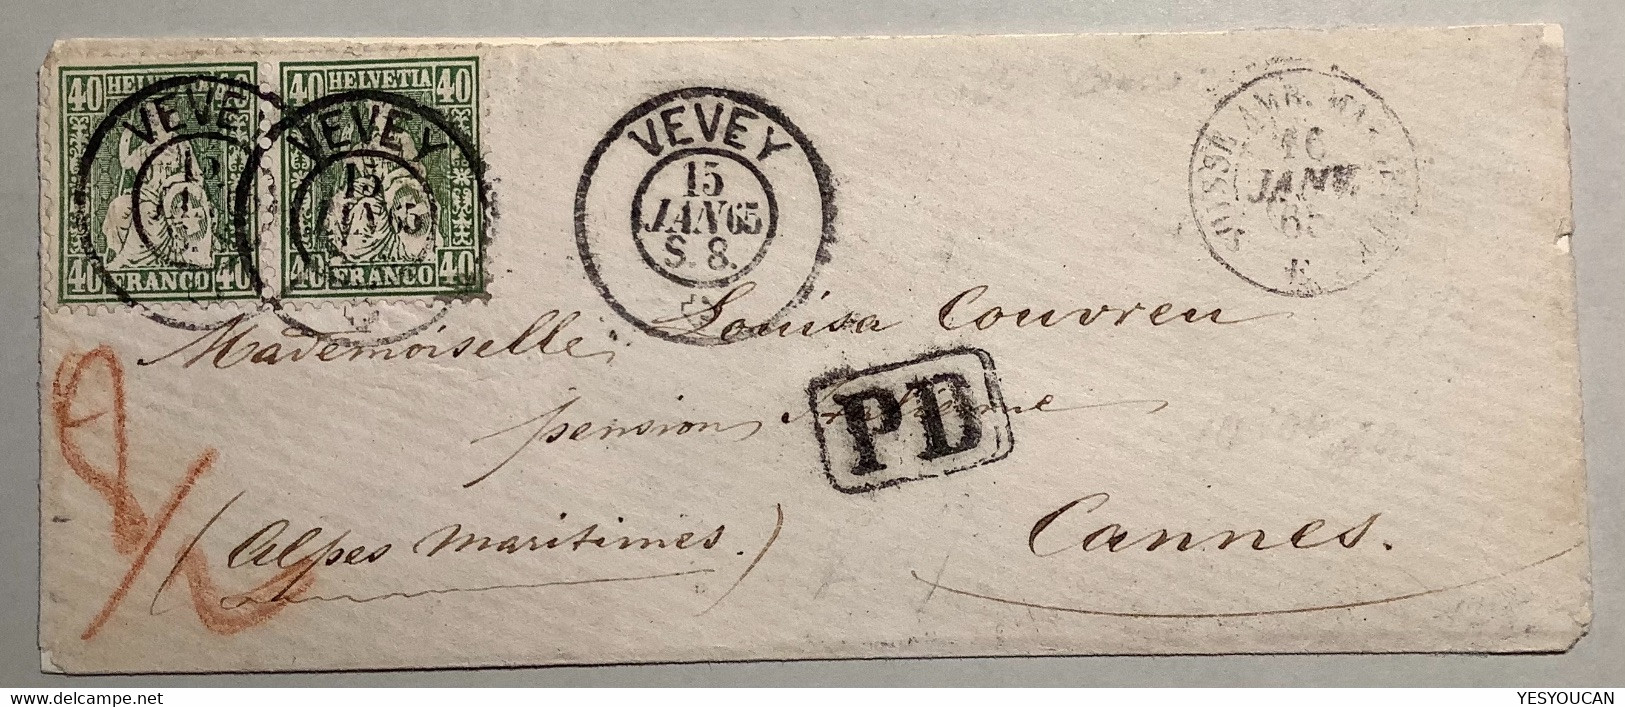 VEVEY 1865 (VD) Brief>Cannes Alpes Maritimes France, ZNr34 X2 1862 Sitzende Helvetia (Schweiz Suisse Lettre Cover - Covers & Documents